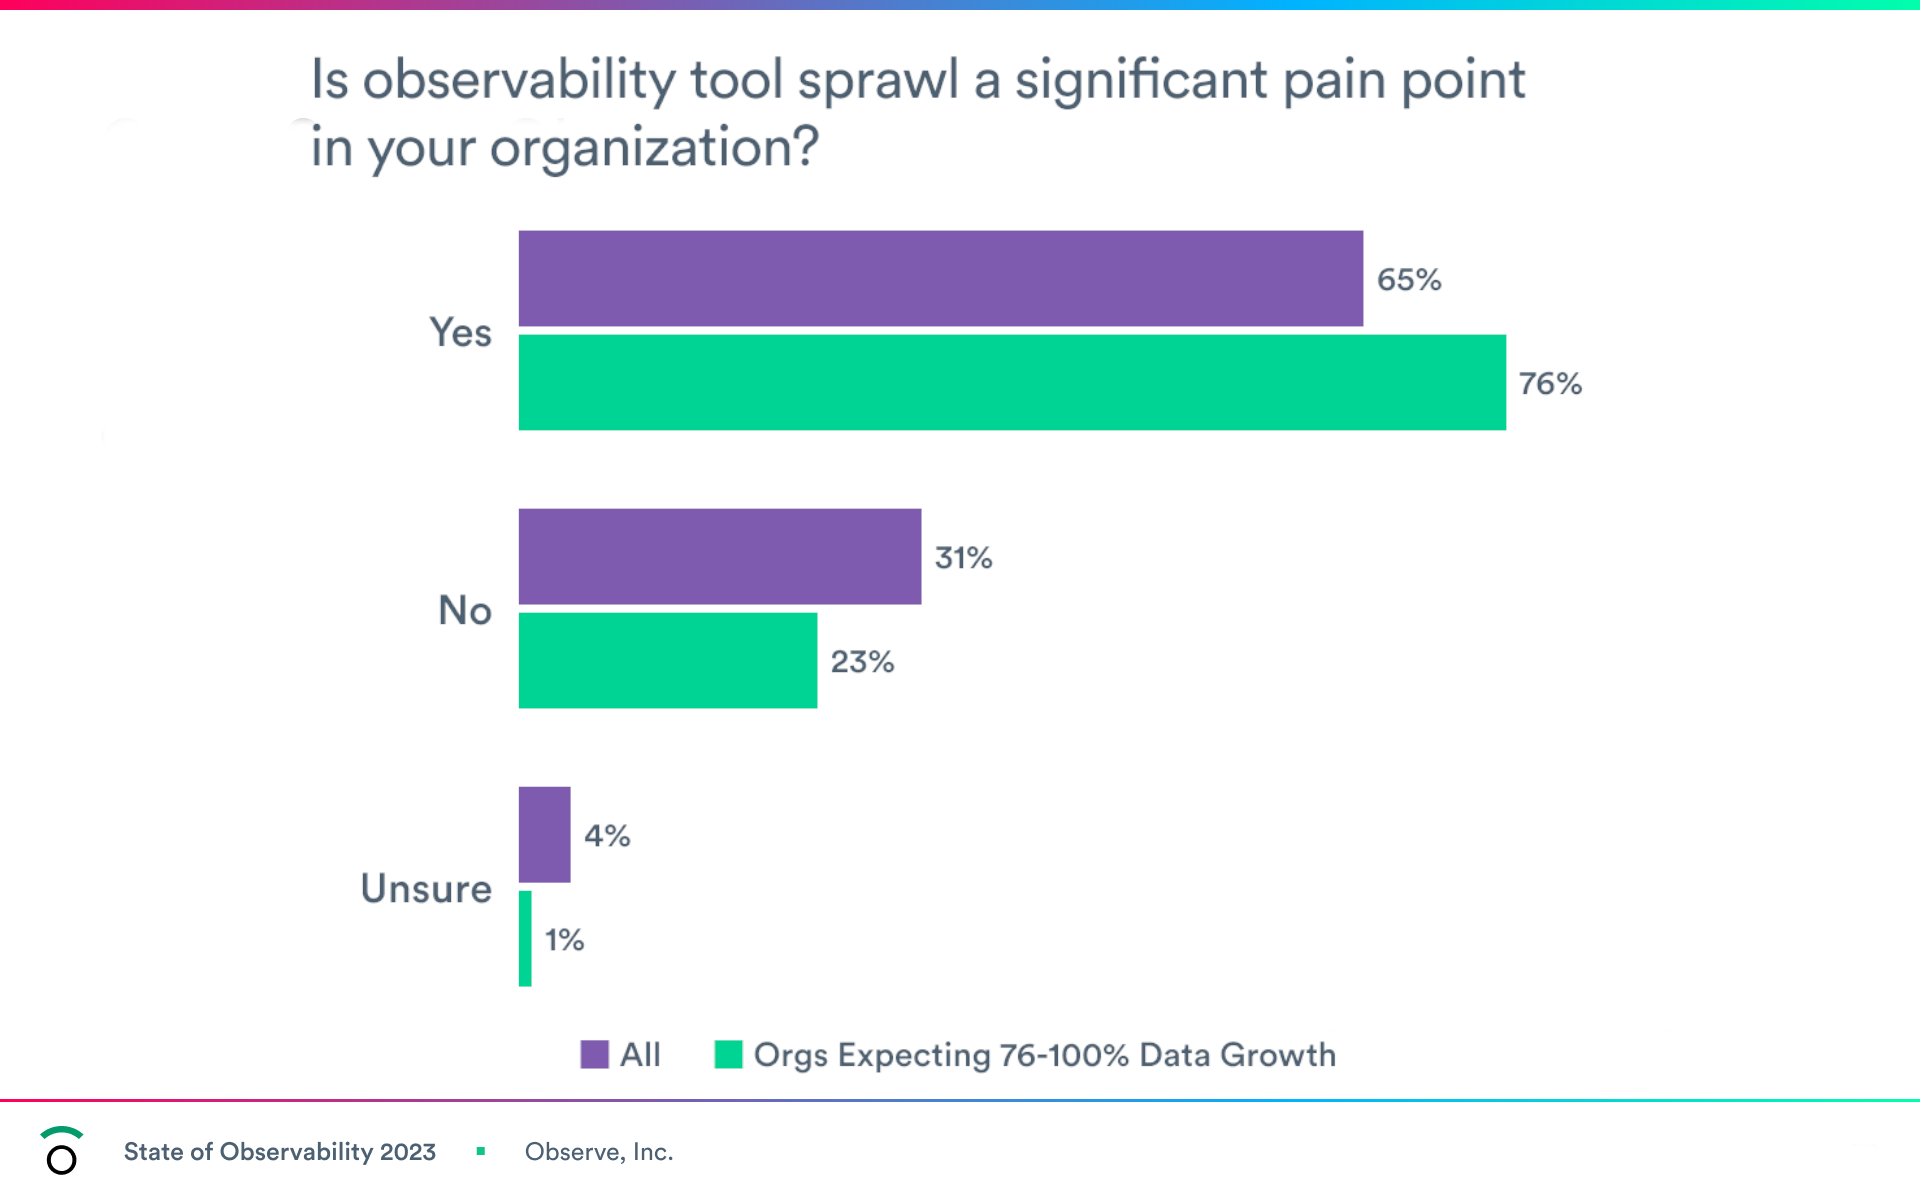 Percent of organizations experiencing tool sprawl pain